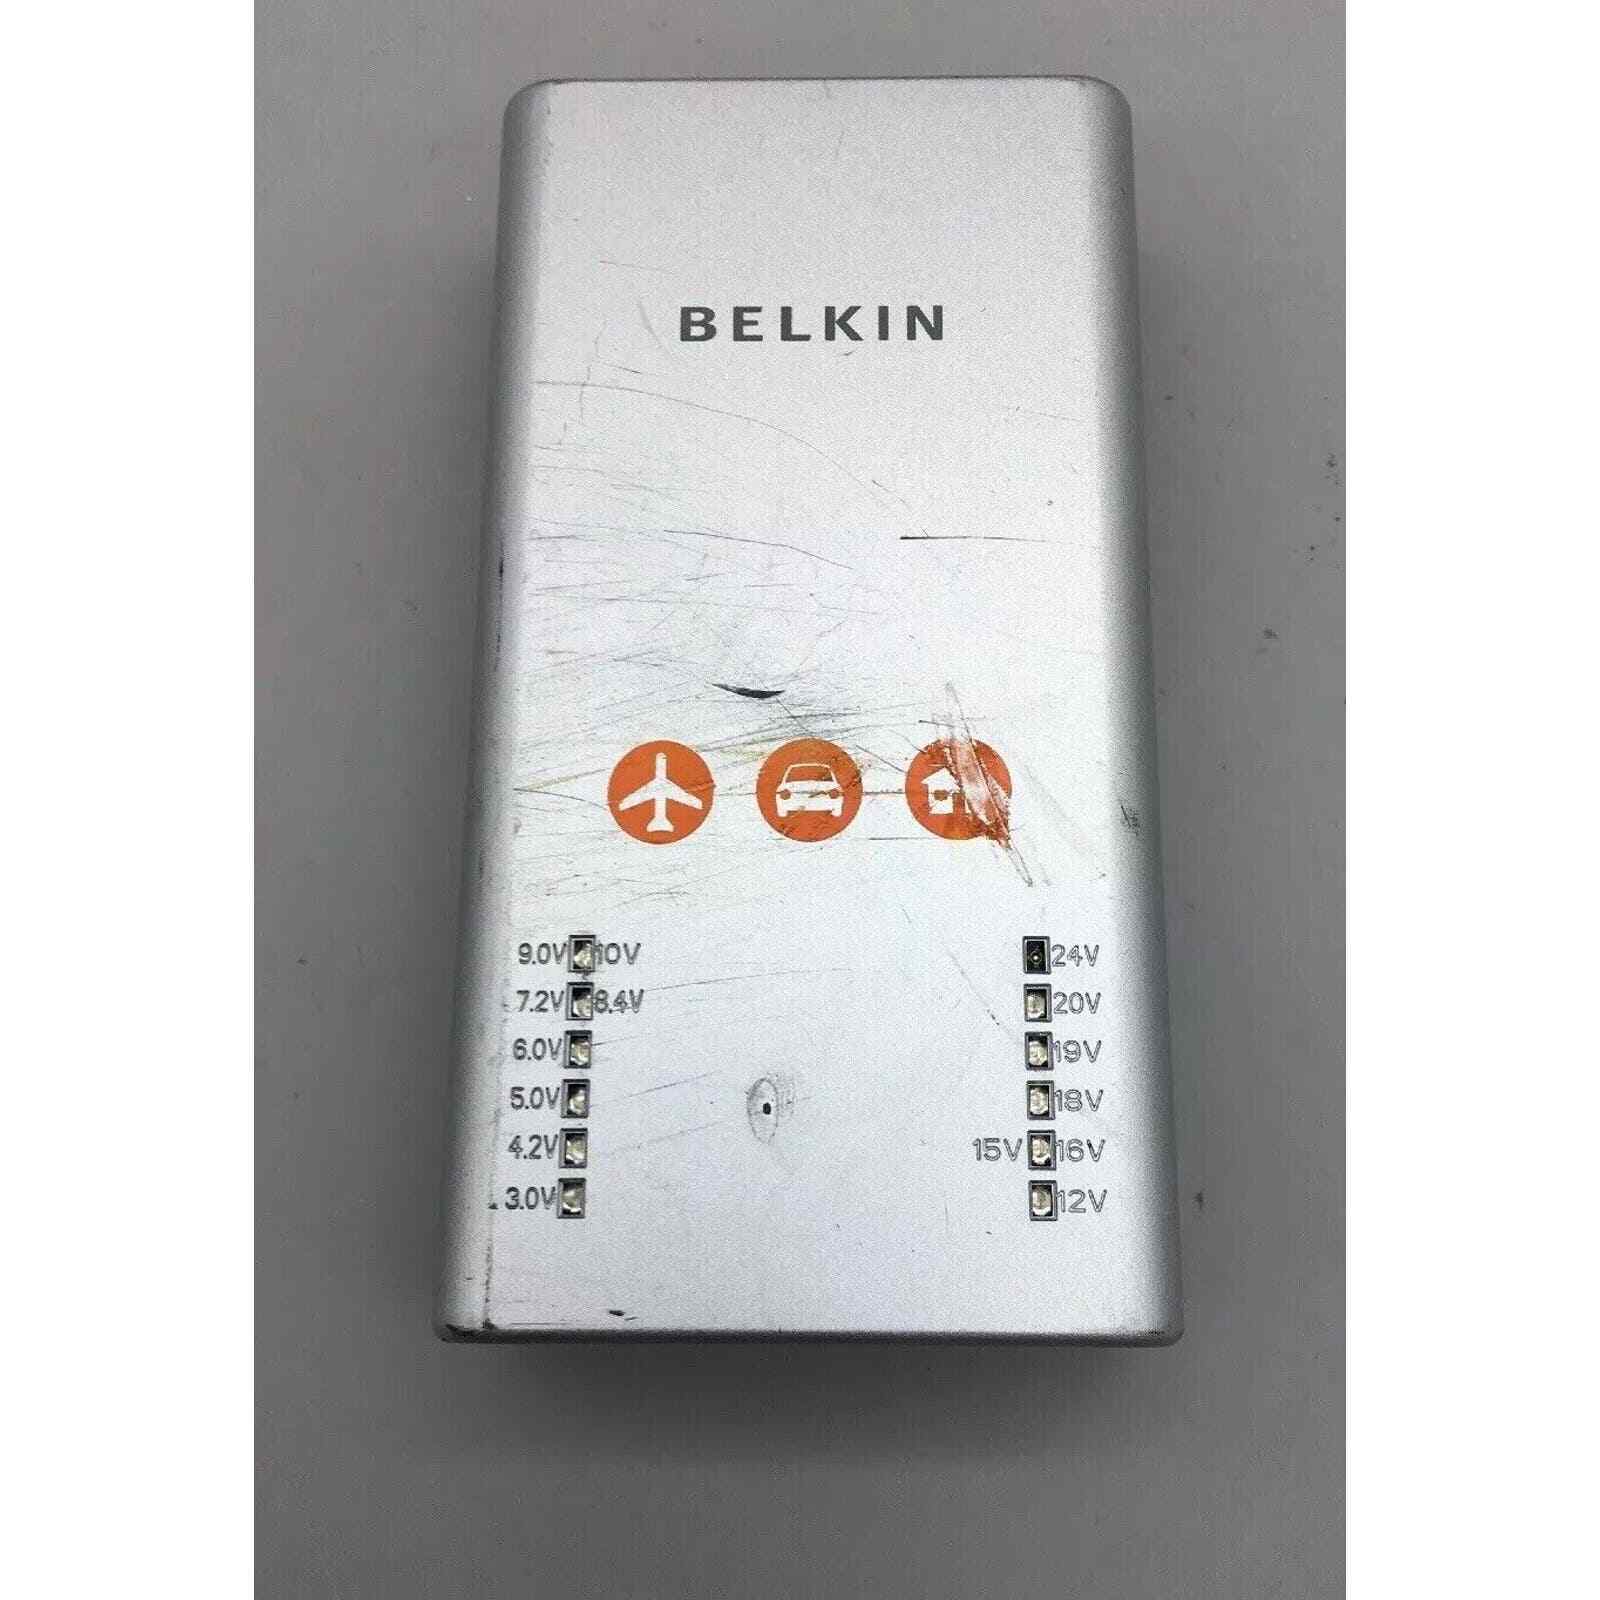 LN Belkin Universal Power Supply F5L005 Surge Protection: Home, Auto - E18